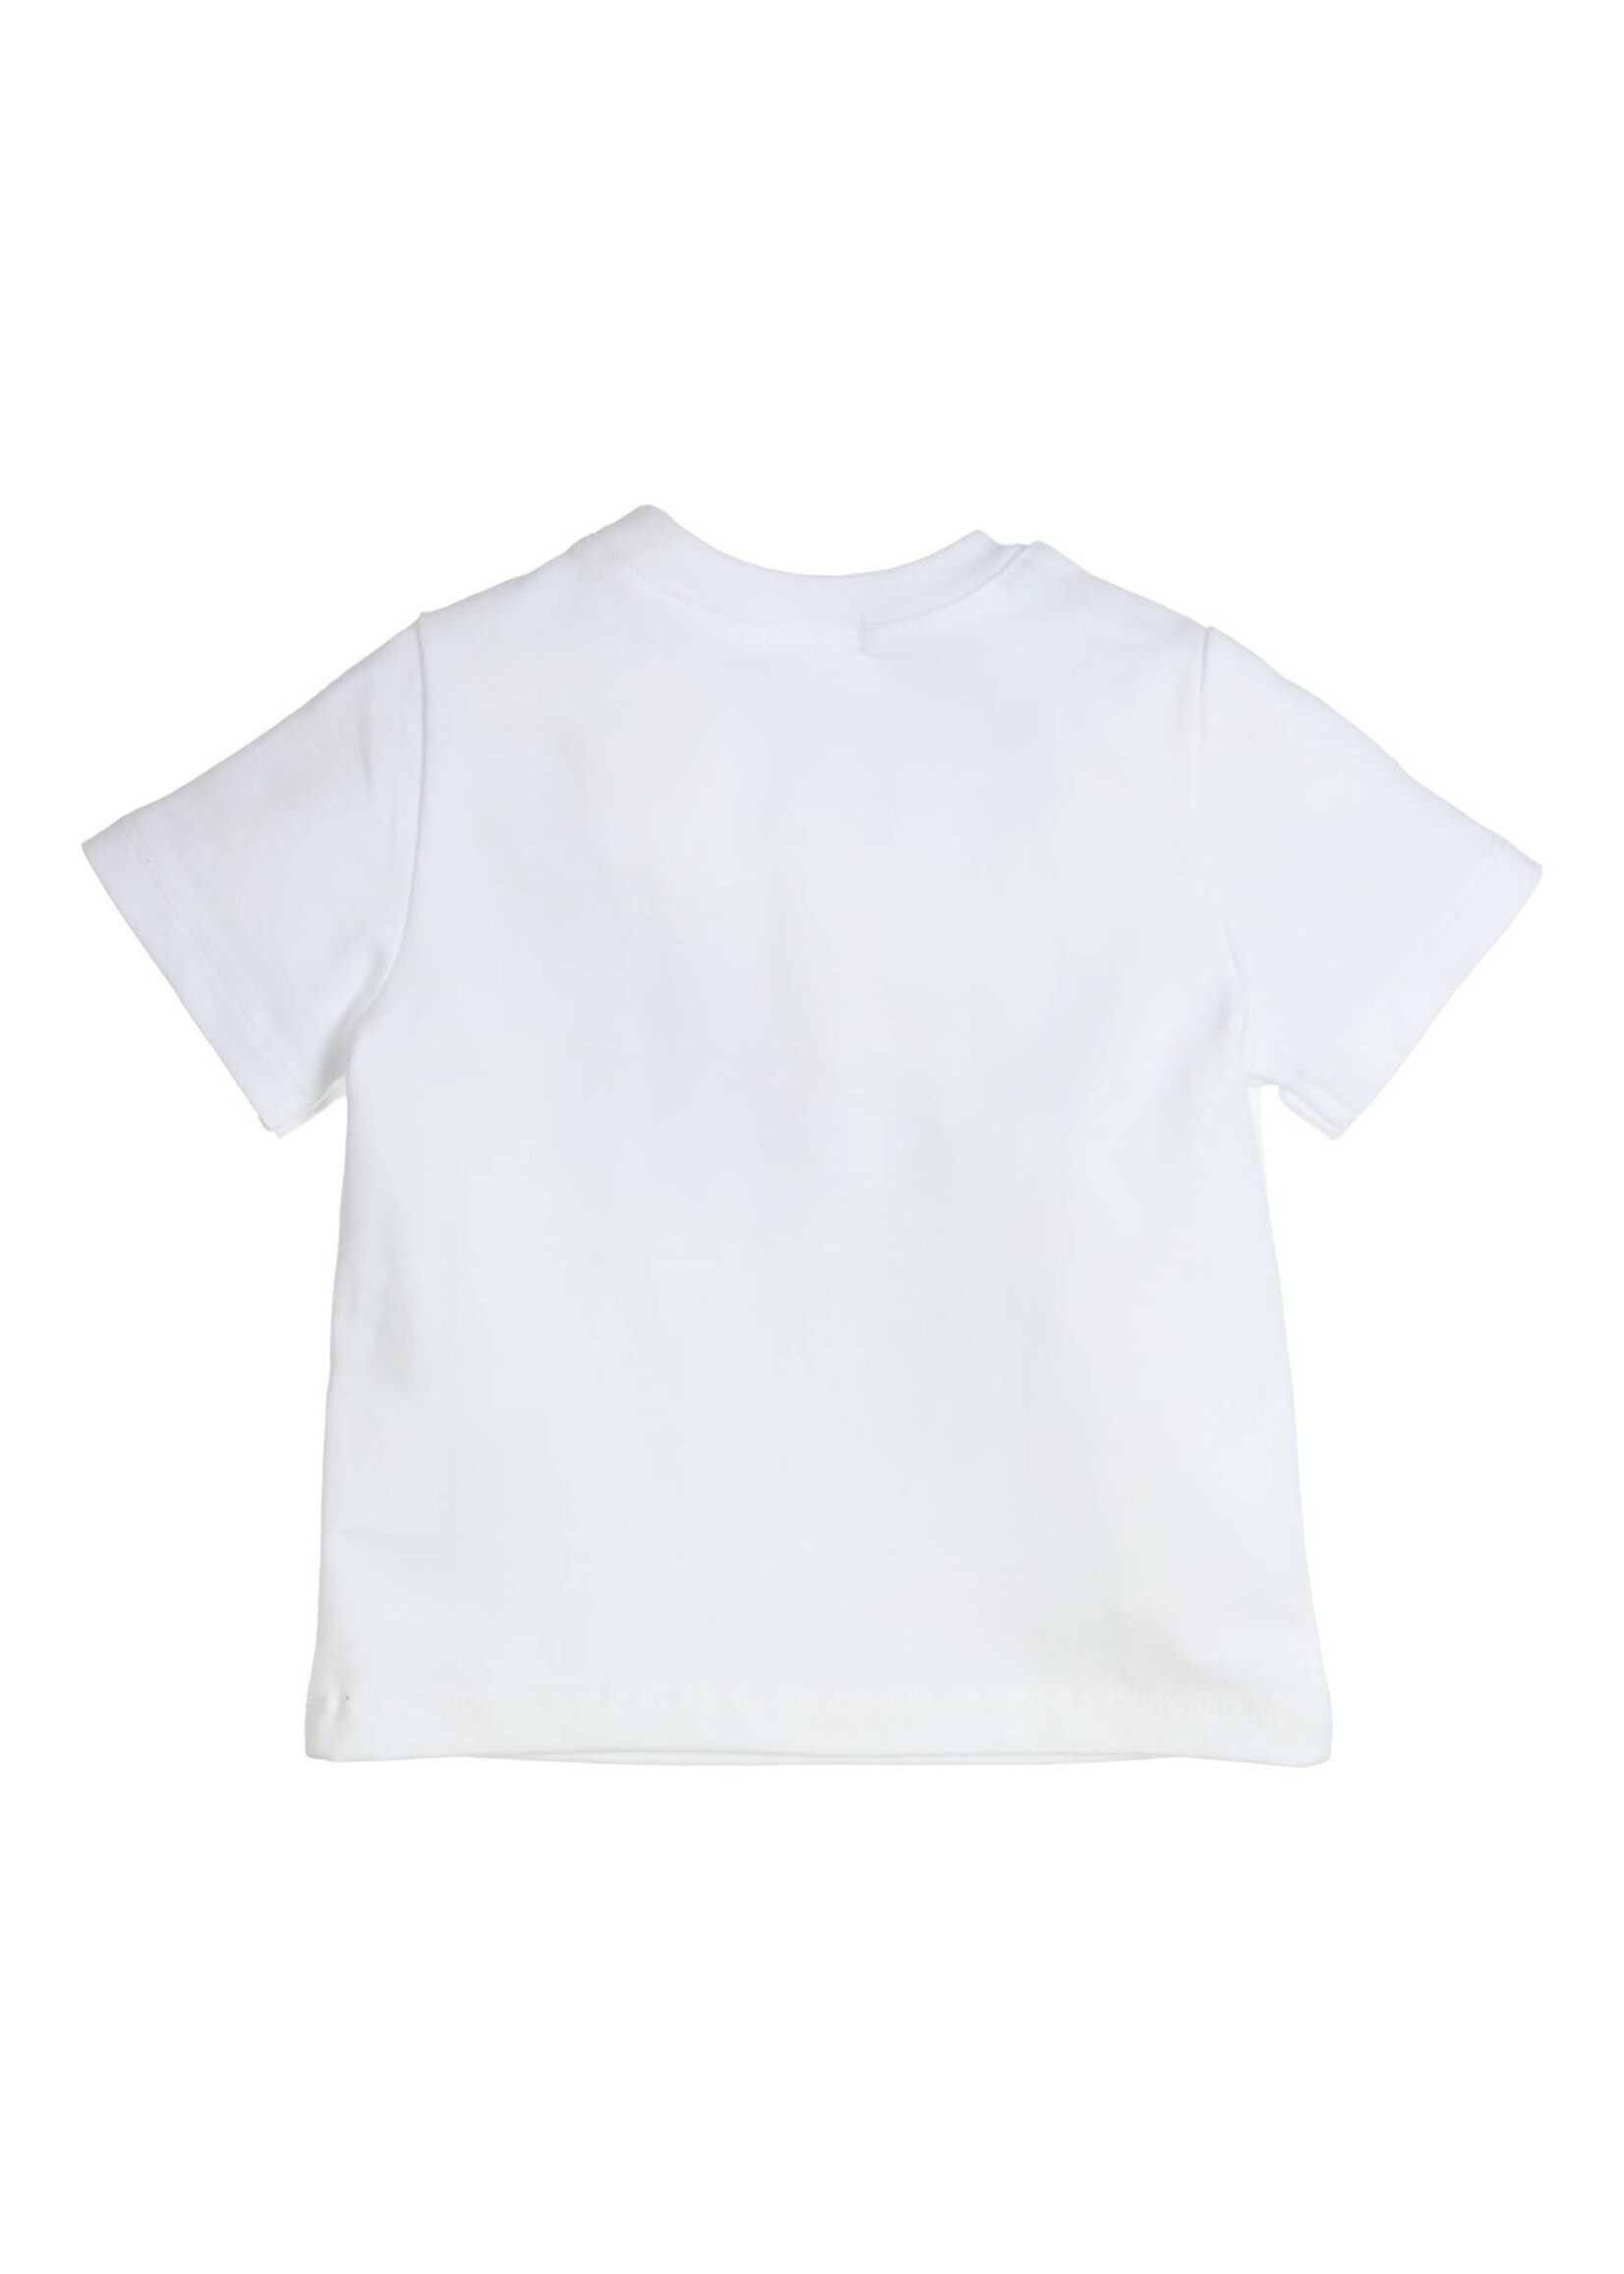 Gymp Boys T-shirt Aerobic Trailer Dogs 353-4438-20 White